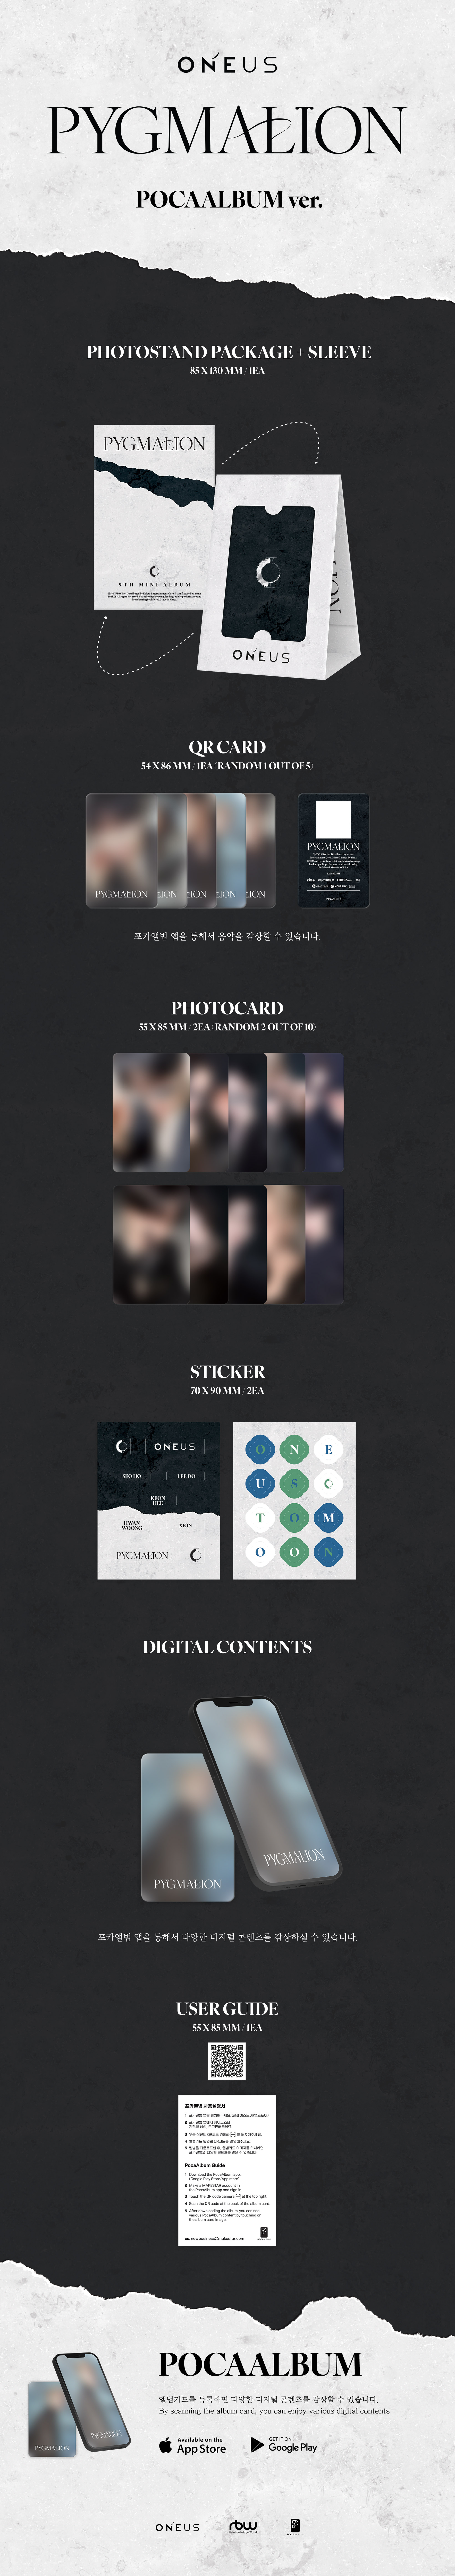 ONEUS  9th Mini Album PYGMALION POCAALBUM ver